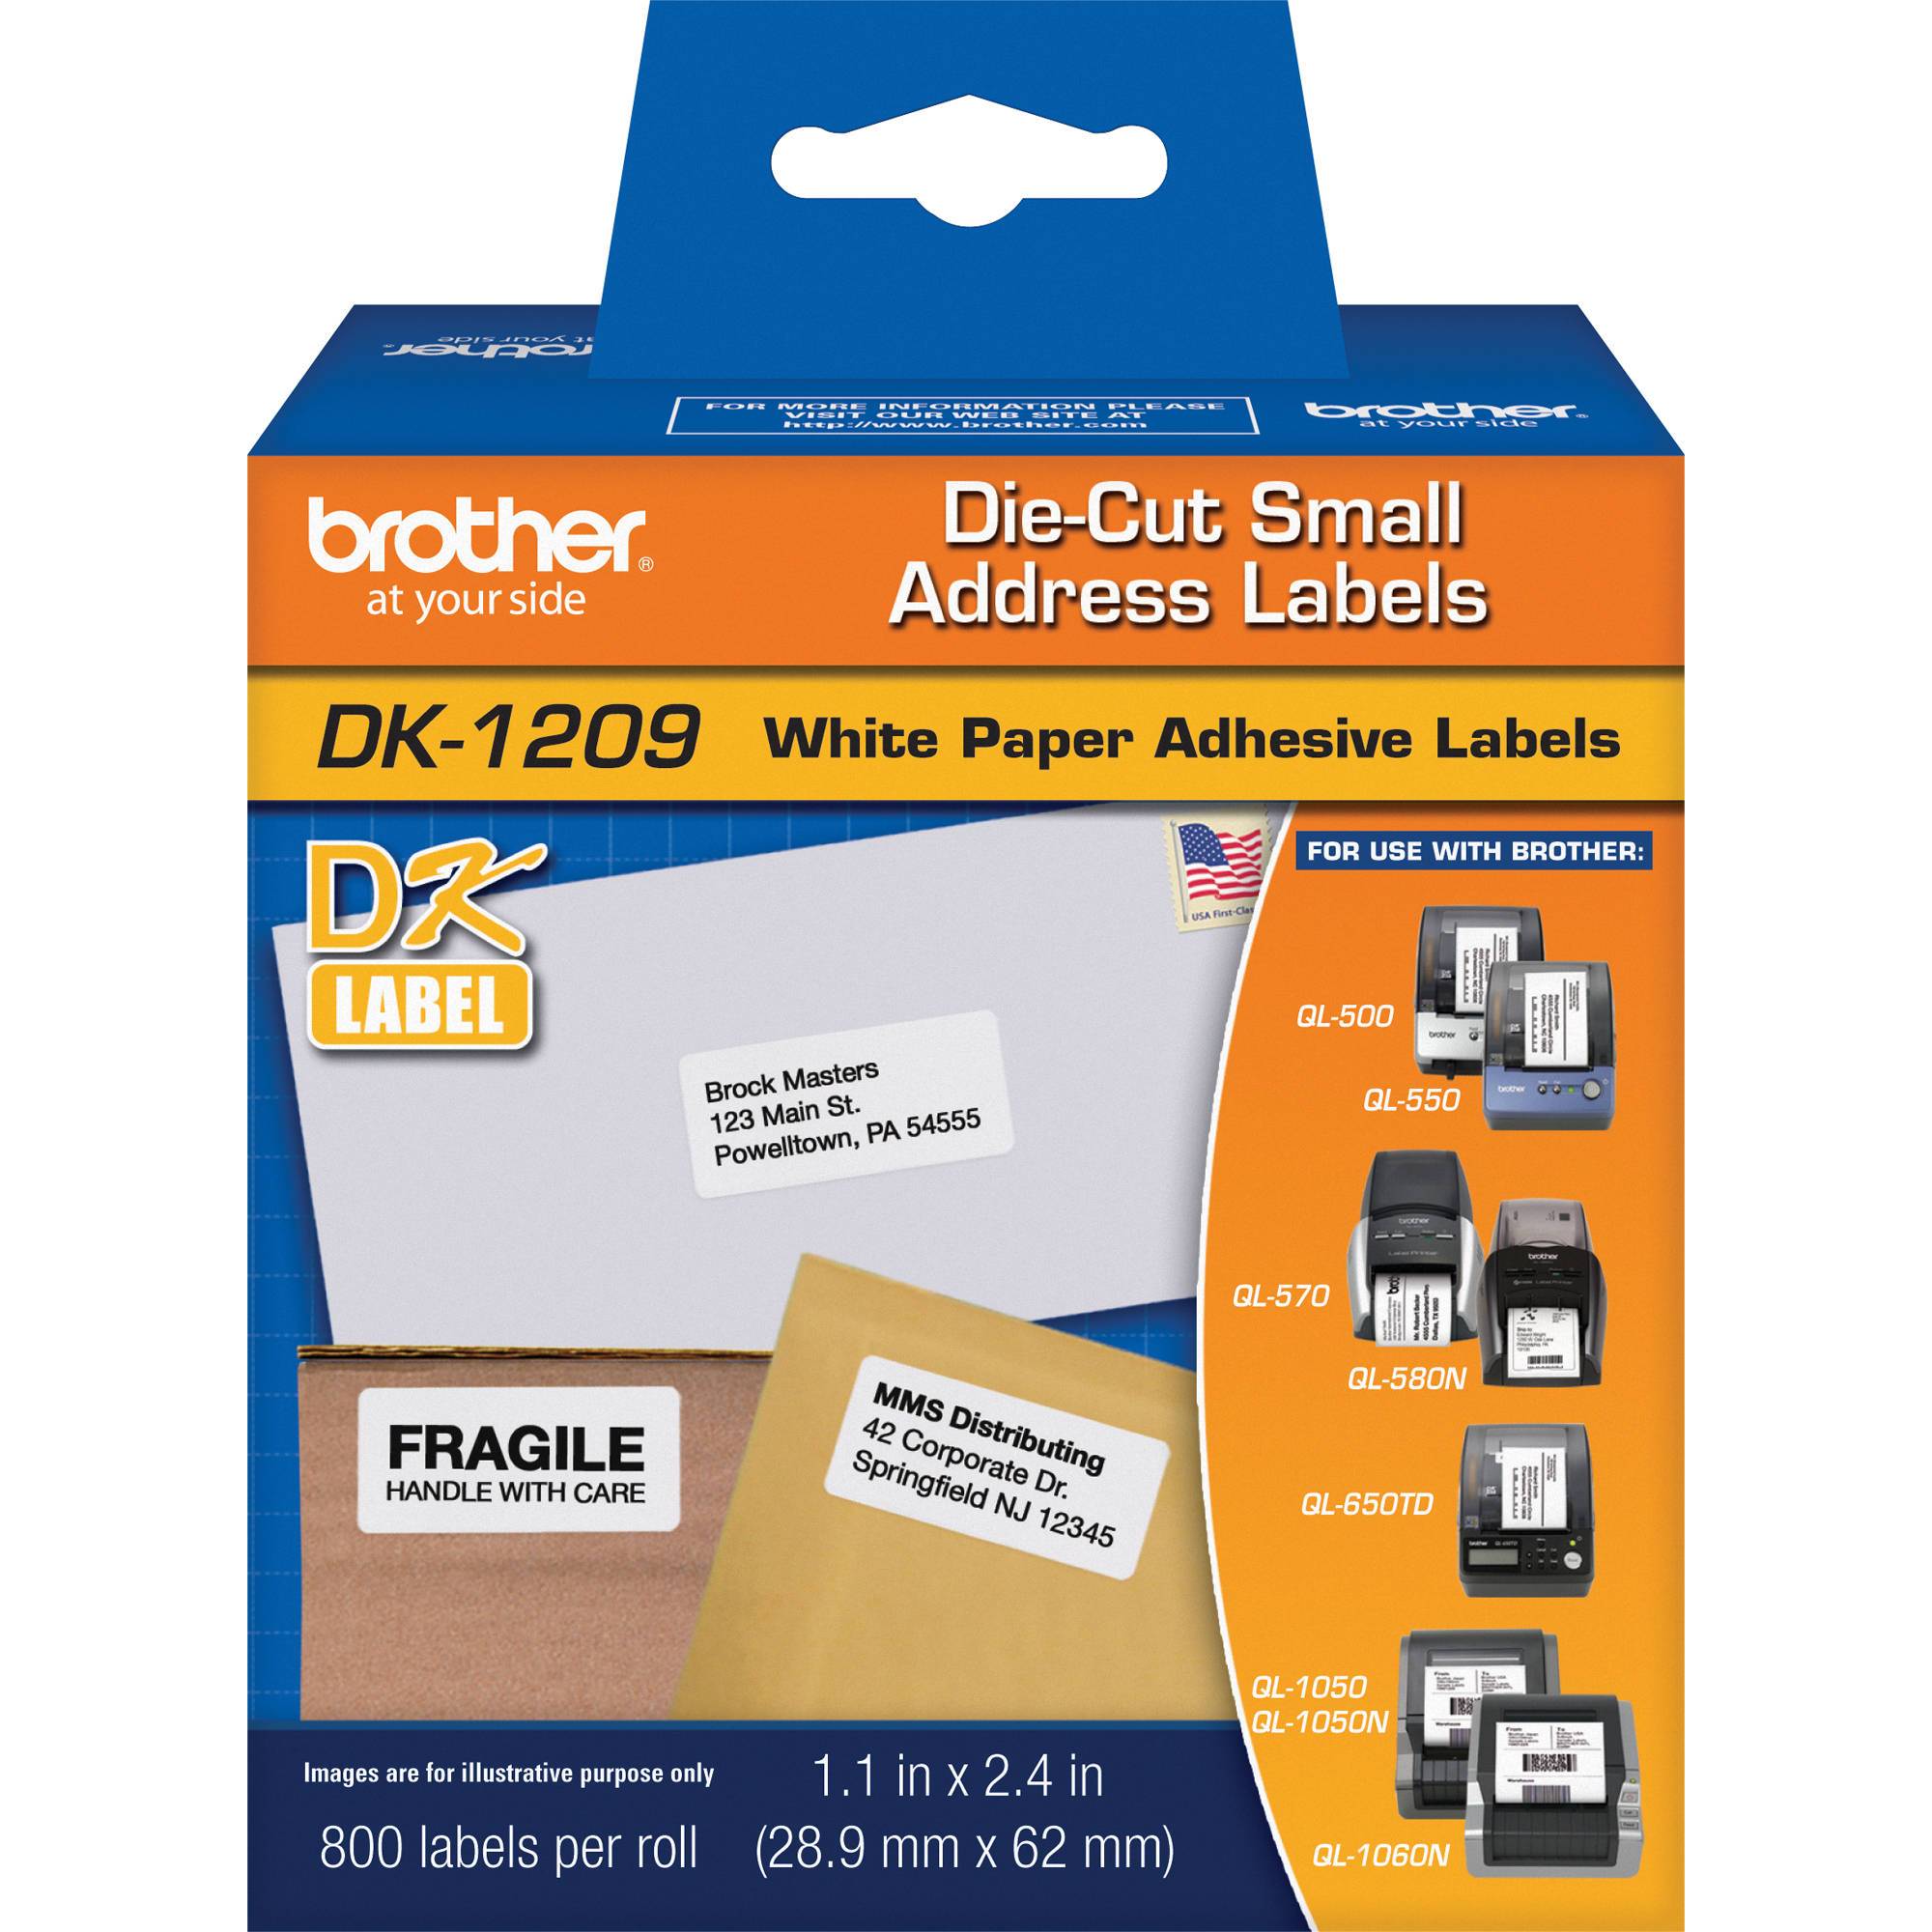 Absolute Toner Copy of Brother DK-1203 Original Genuine OEM Label Printer Labels Tape Brother Tape